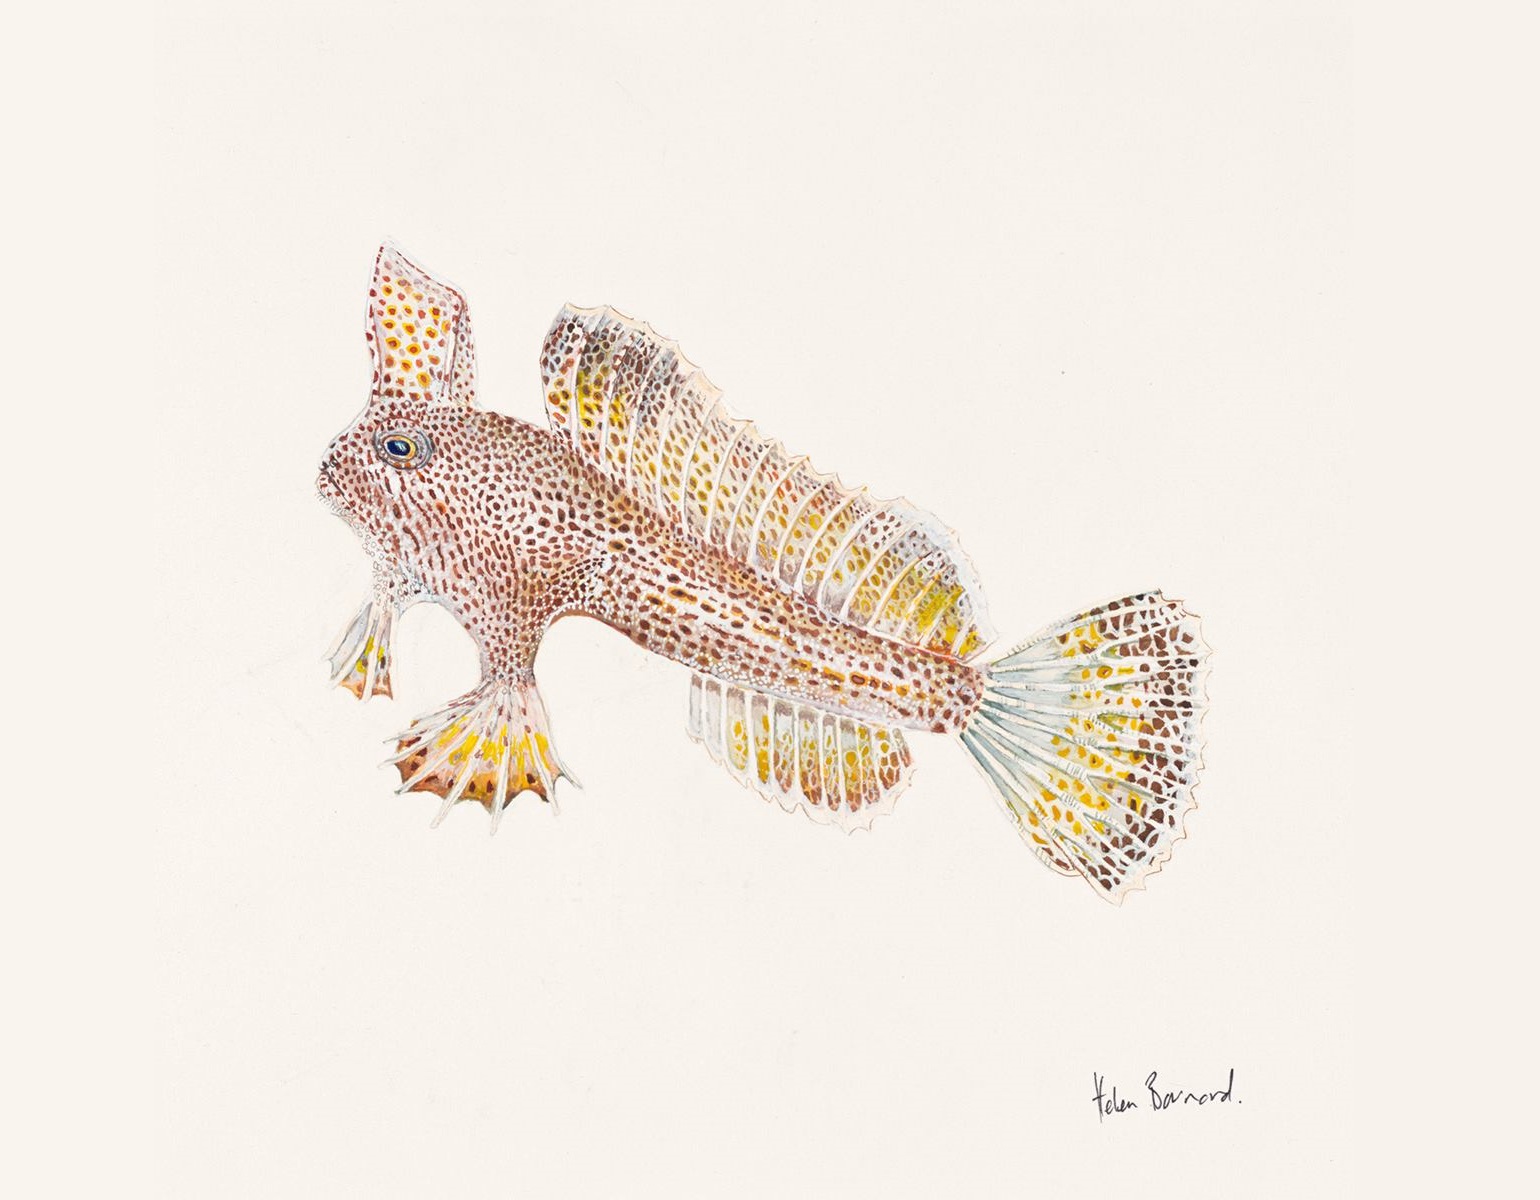 Spotted handfish by artist Helen Barnard